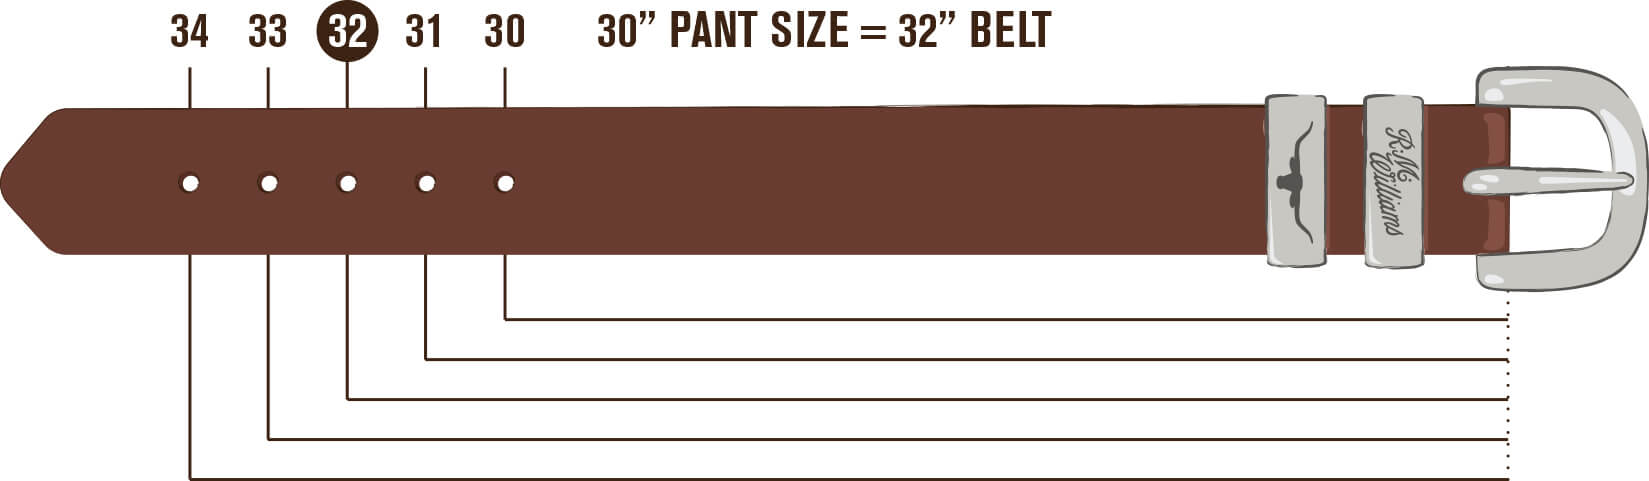 3 Ways to Determine Belt Size - wikiHow